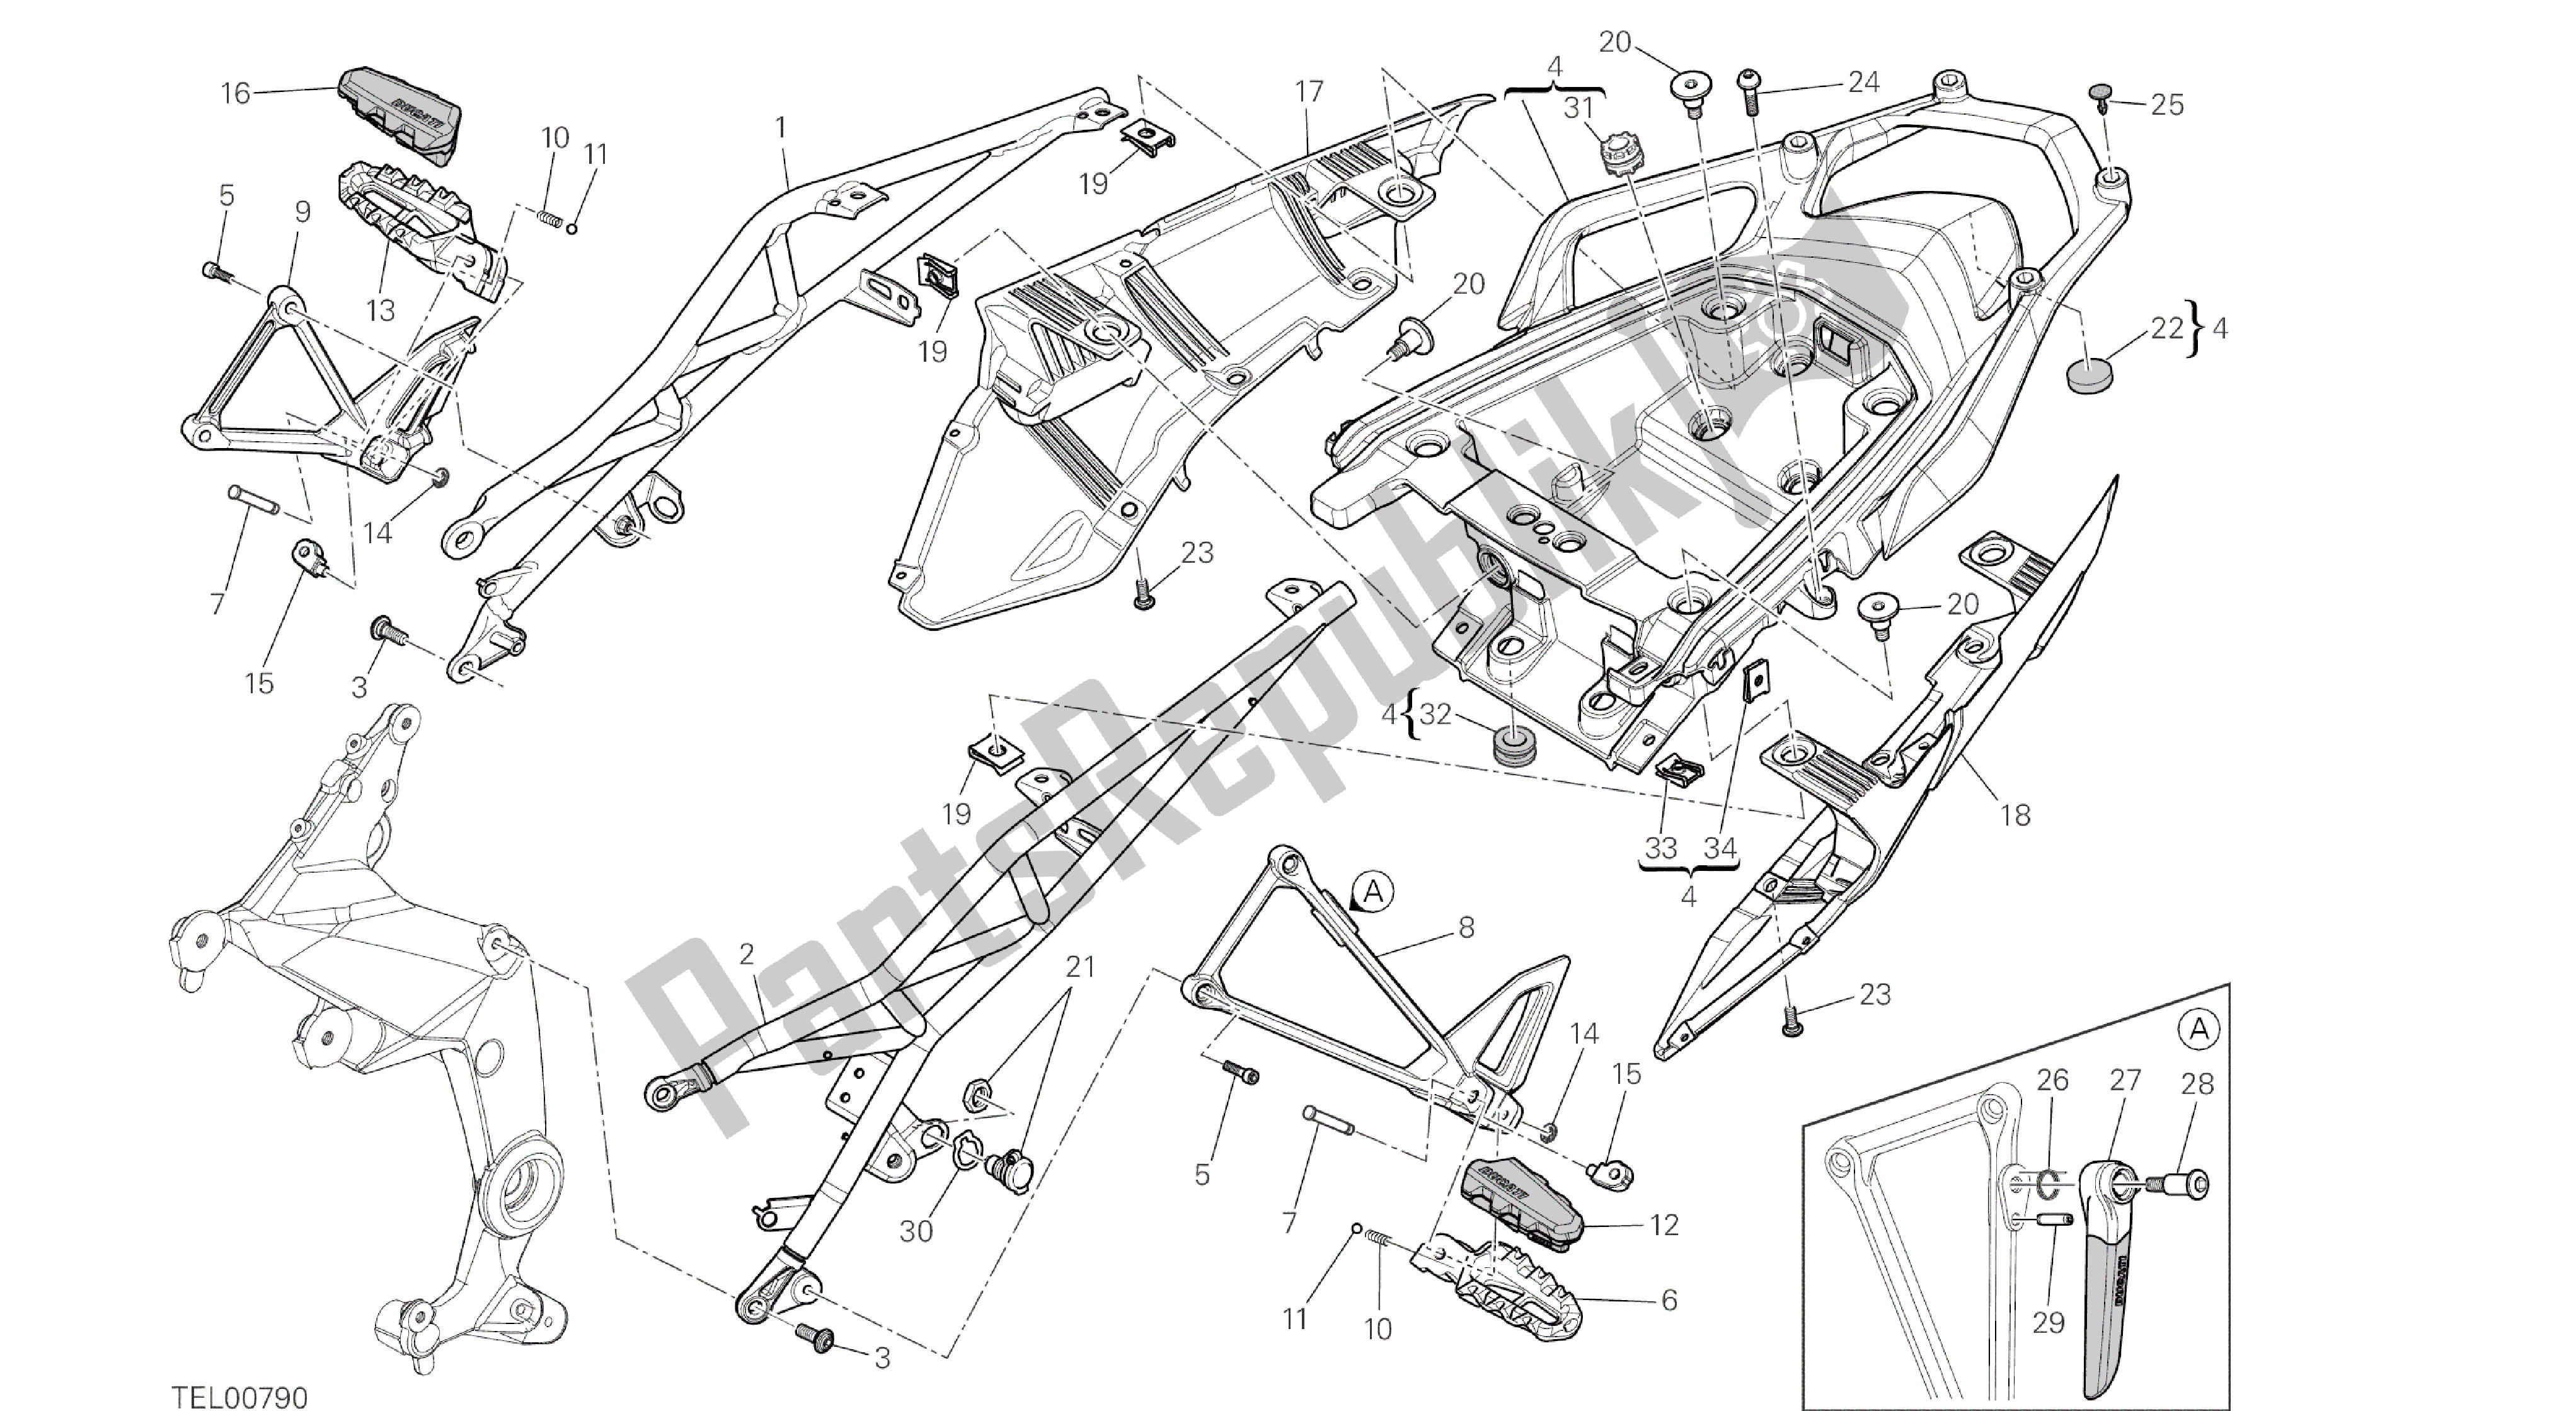 Todas las partes para Dibujo 027 - Compilación Del Bastidor Trasero [mod: Ms1200st; Xst: Aus, Chn, Eur, Fra, Jap, Tha] Frame Group de Ducati Multistrada S Touring 1200 2014